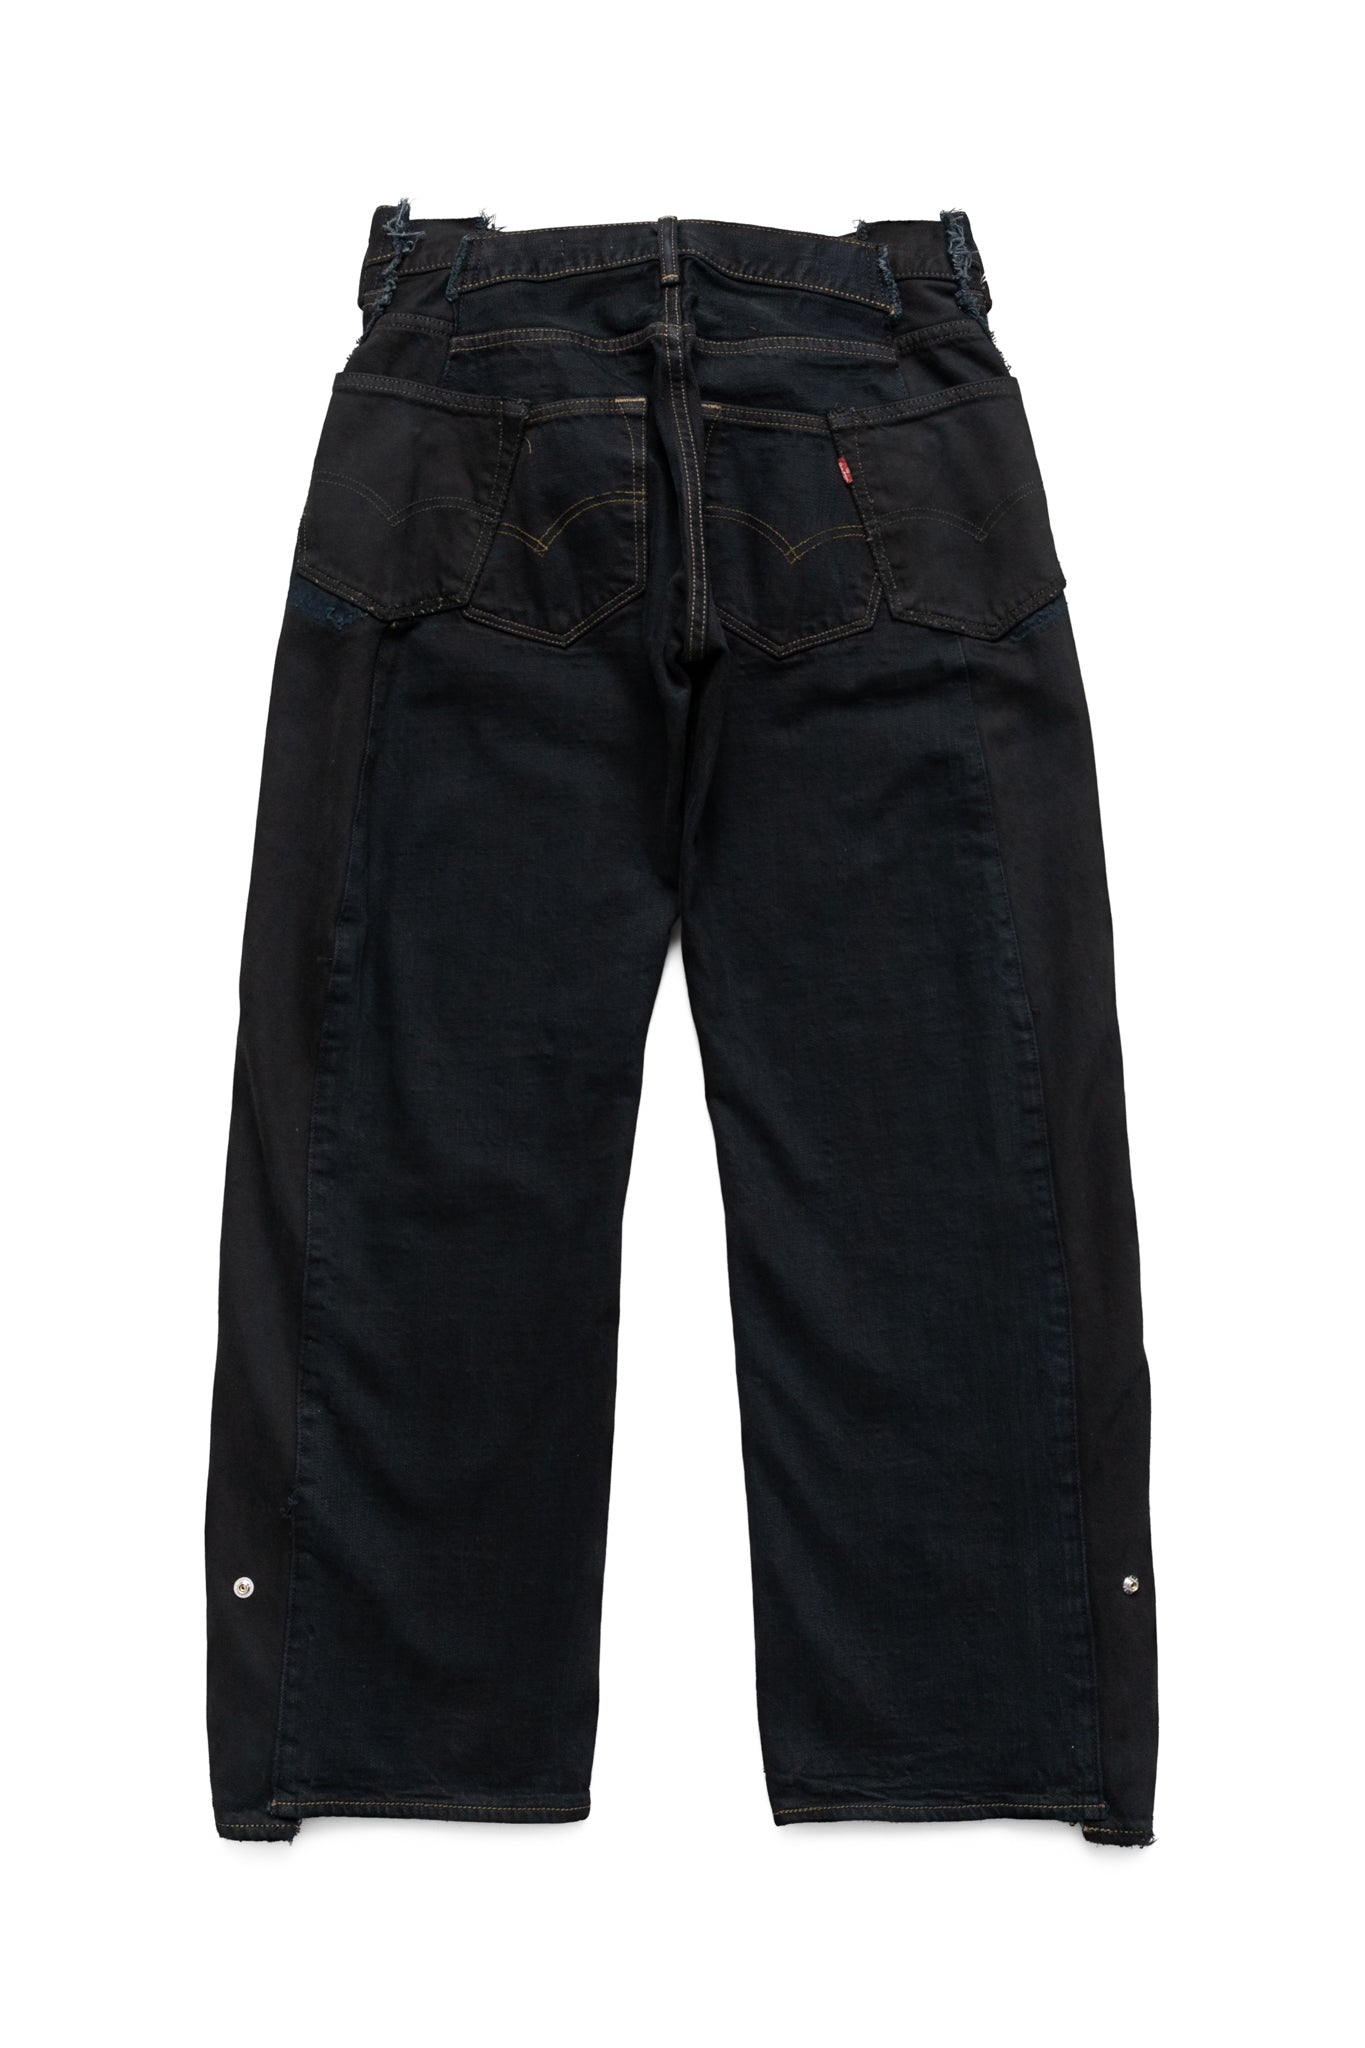 Zip Baggy Jeans Black - M (2)